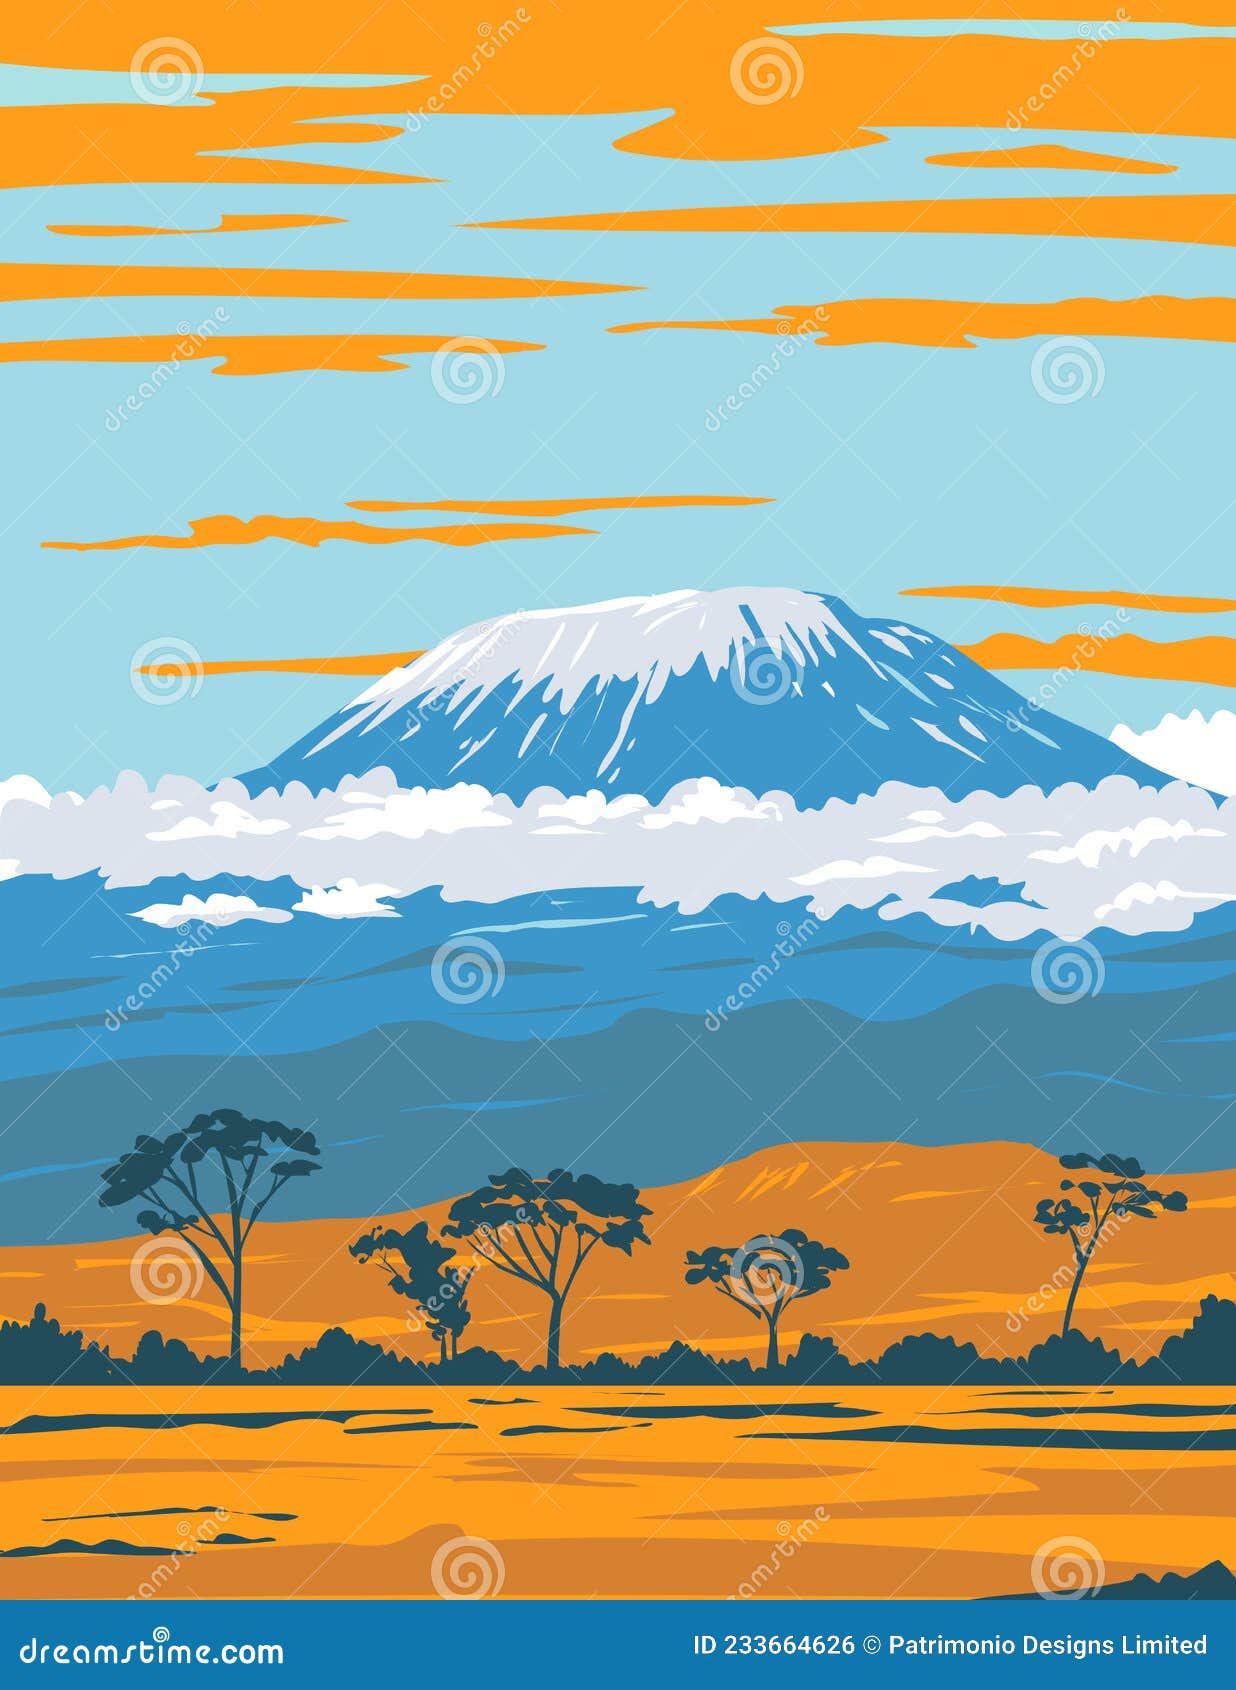 mount kilimanjaro dormant volcano in tanzania the highest mountain in africa wpa poster art